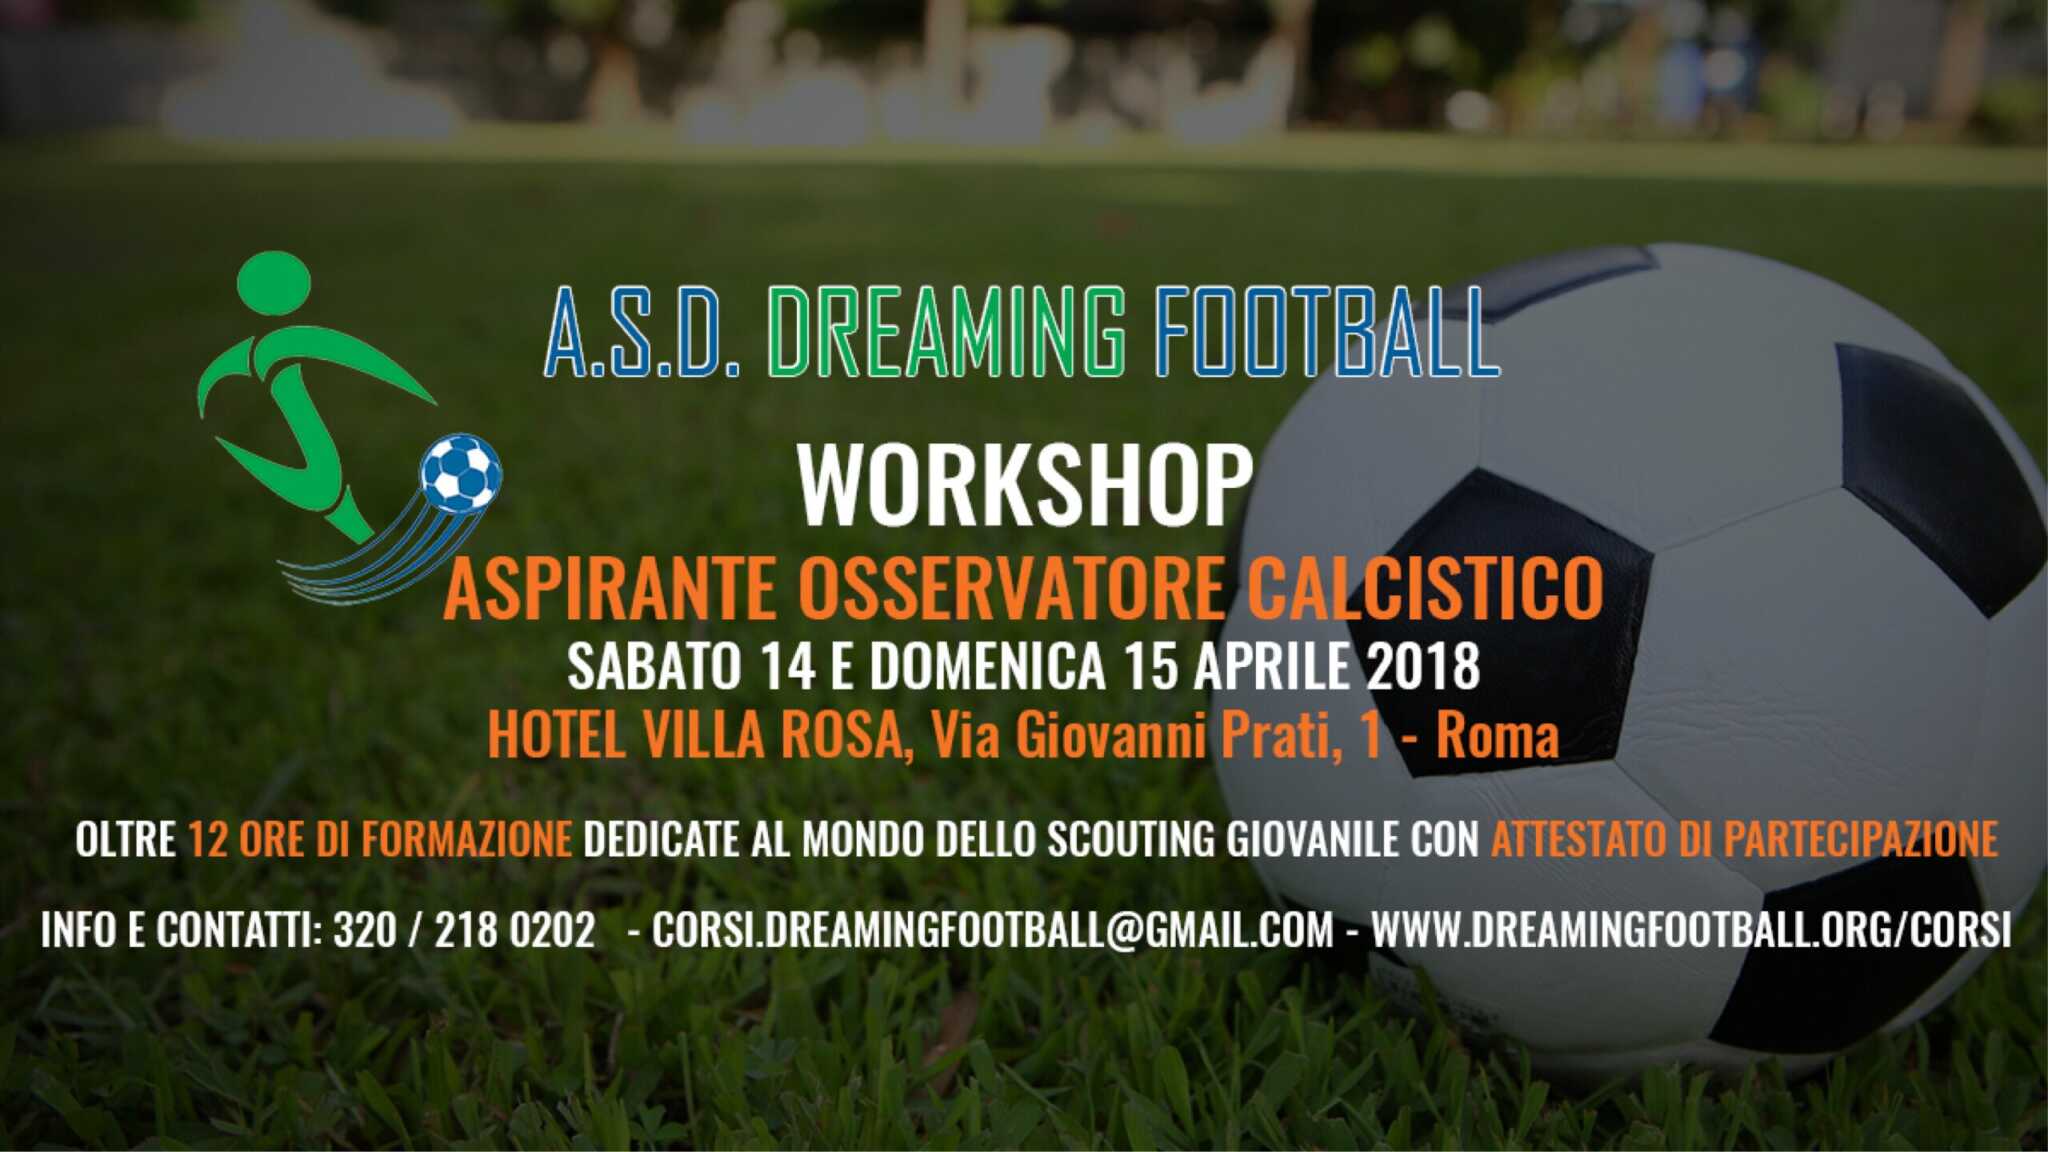 Dreaming Football workshop aspirante osservatore calcistico